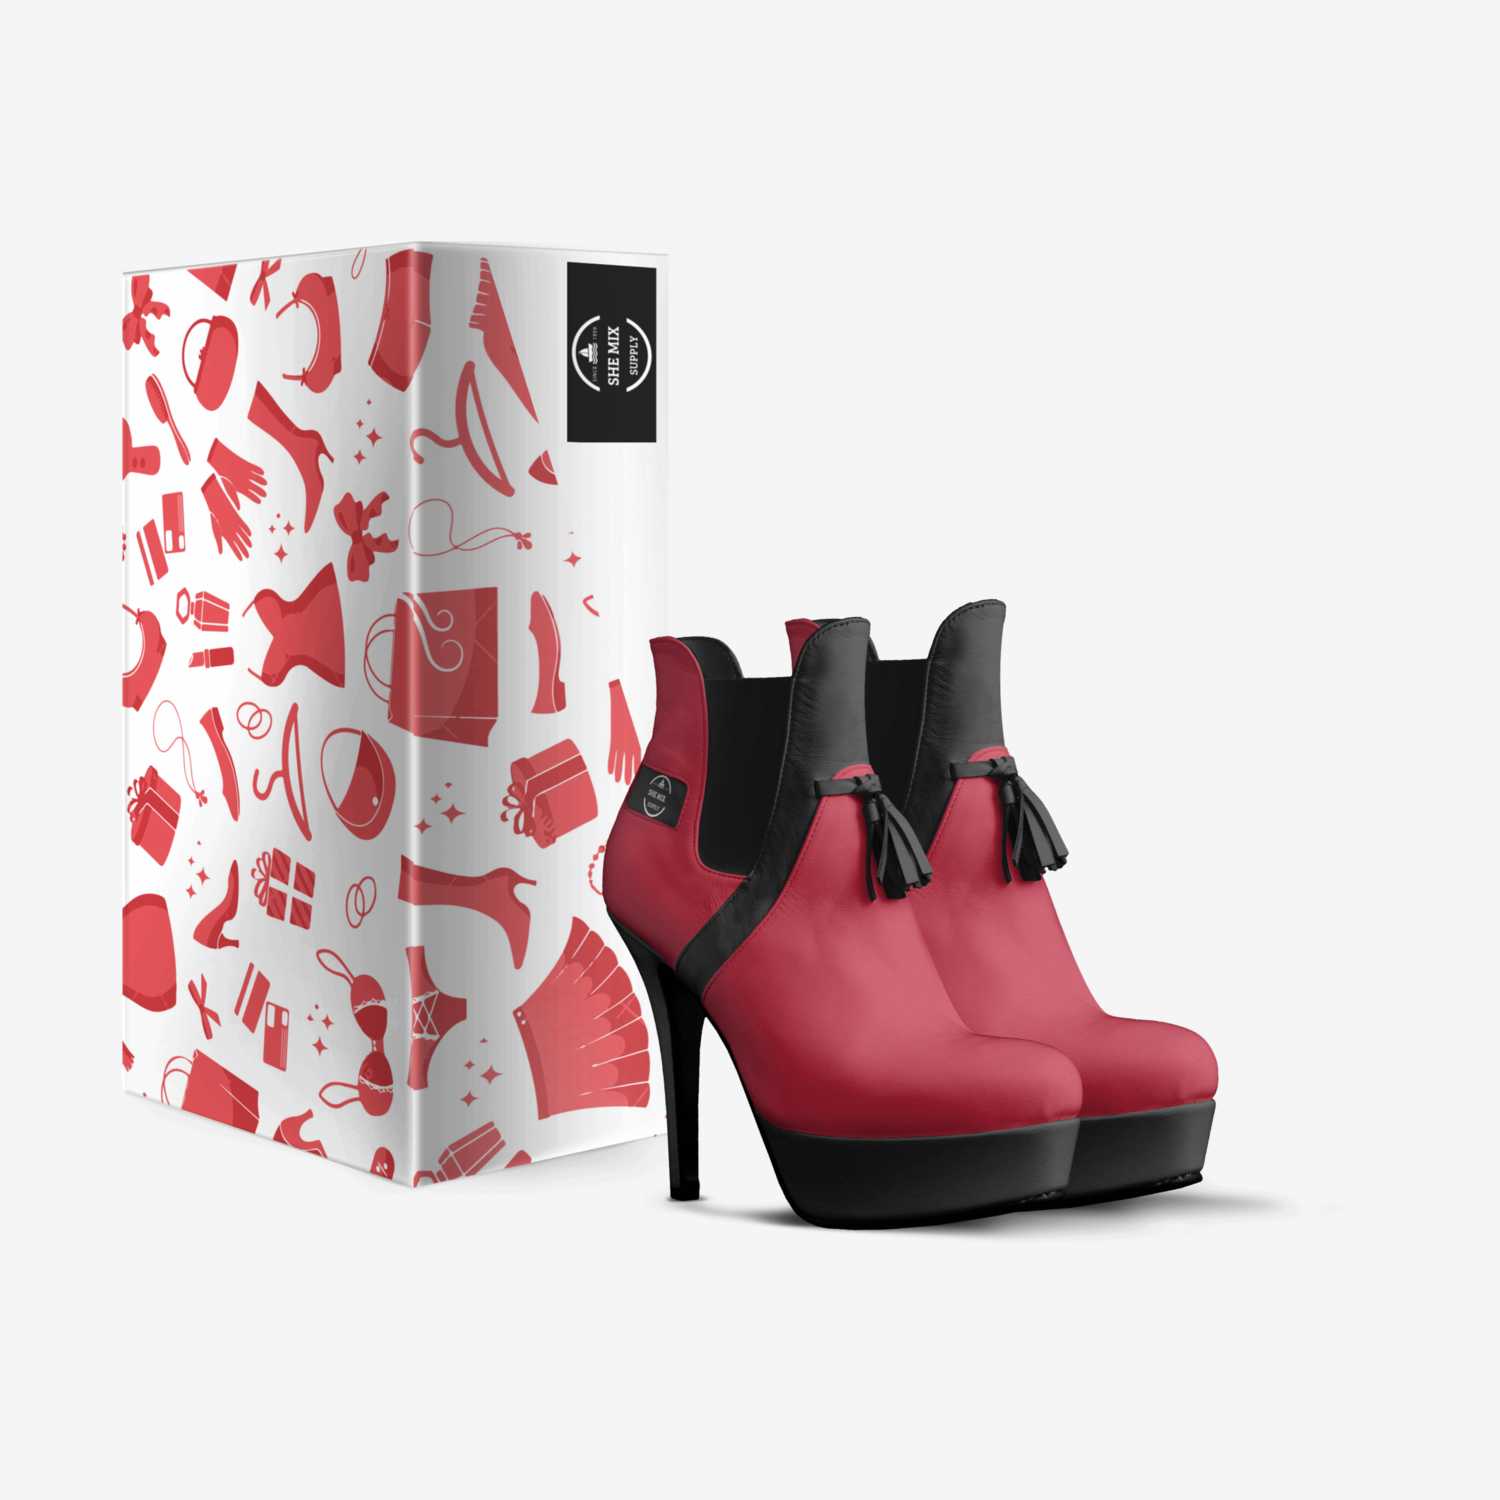 She Mix  custom made in Italy shoes by Natasha Robinson | Box view